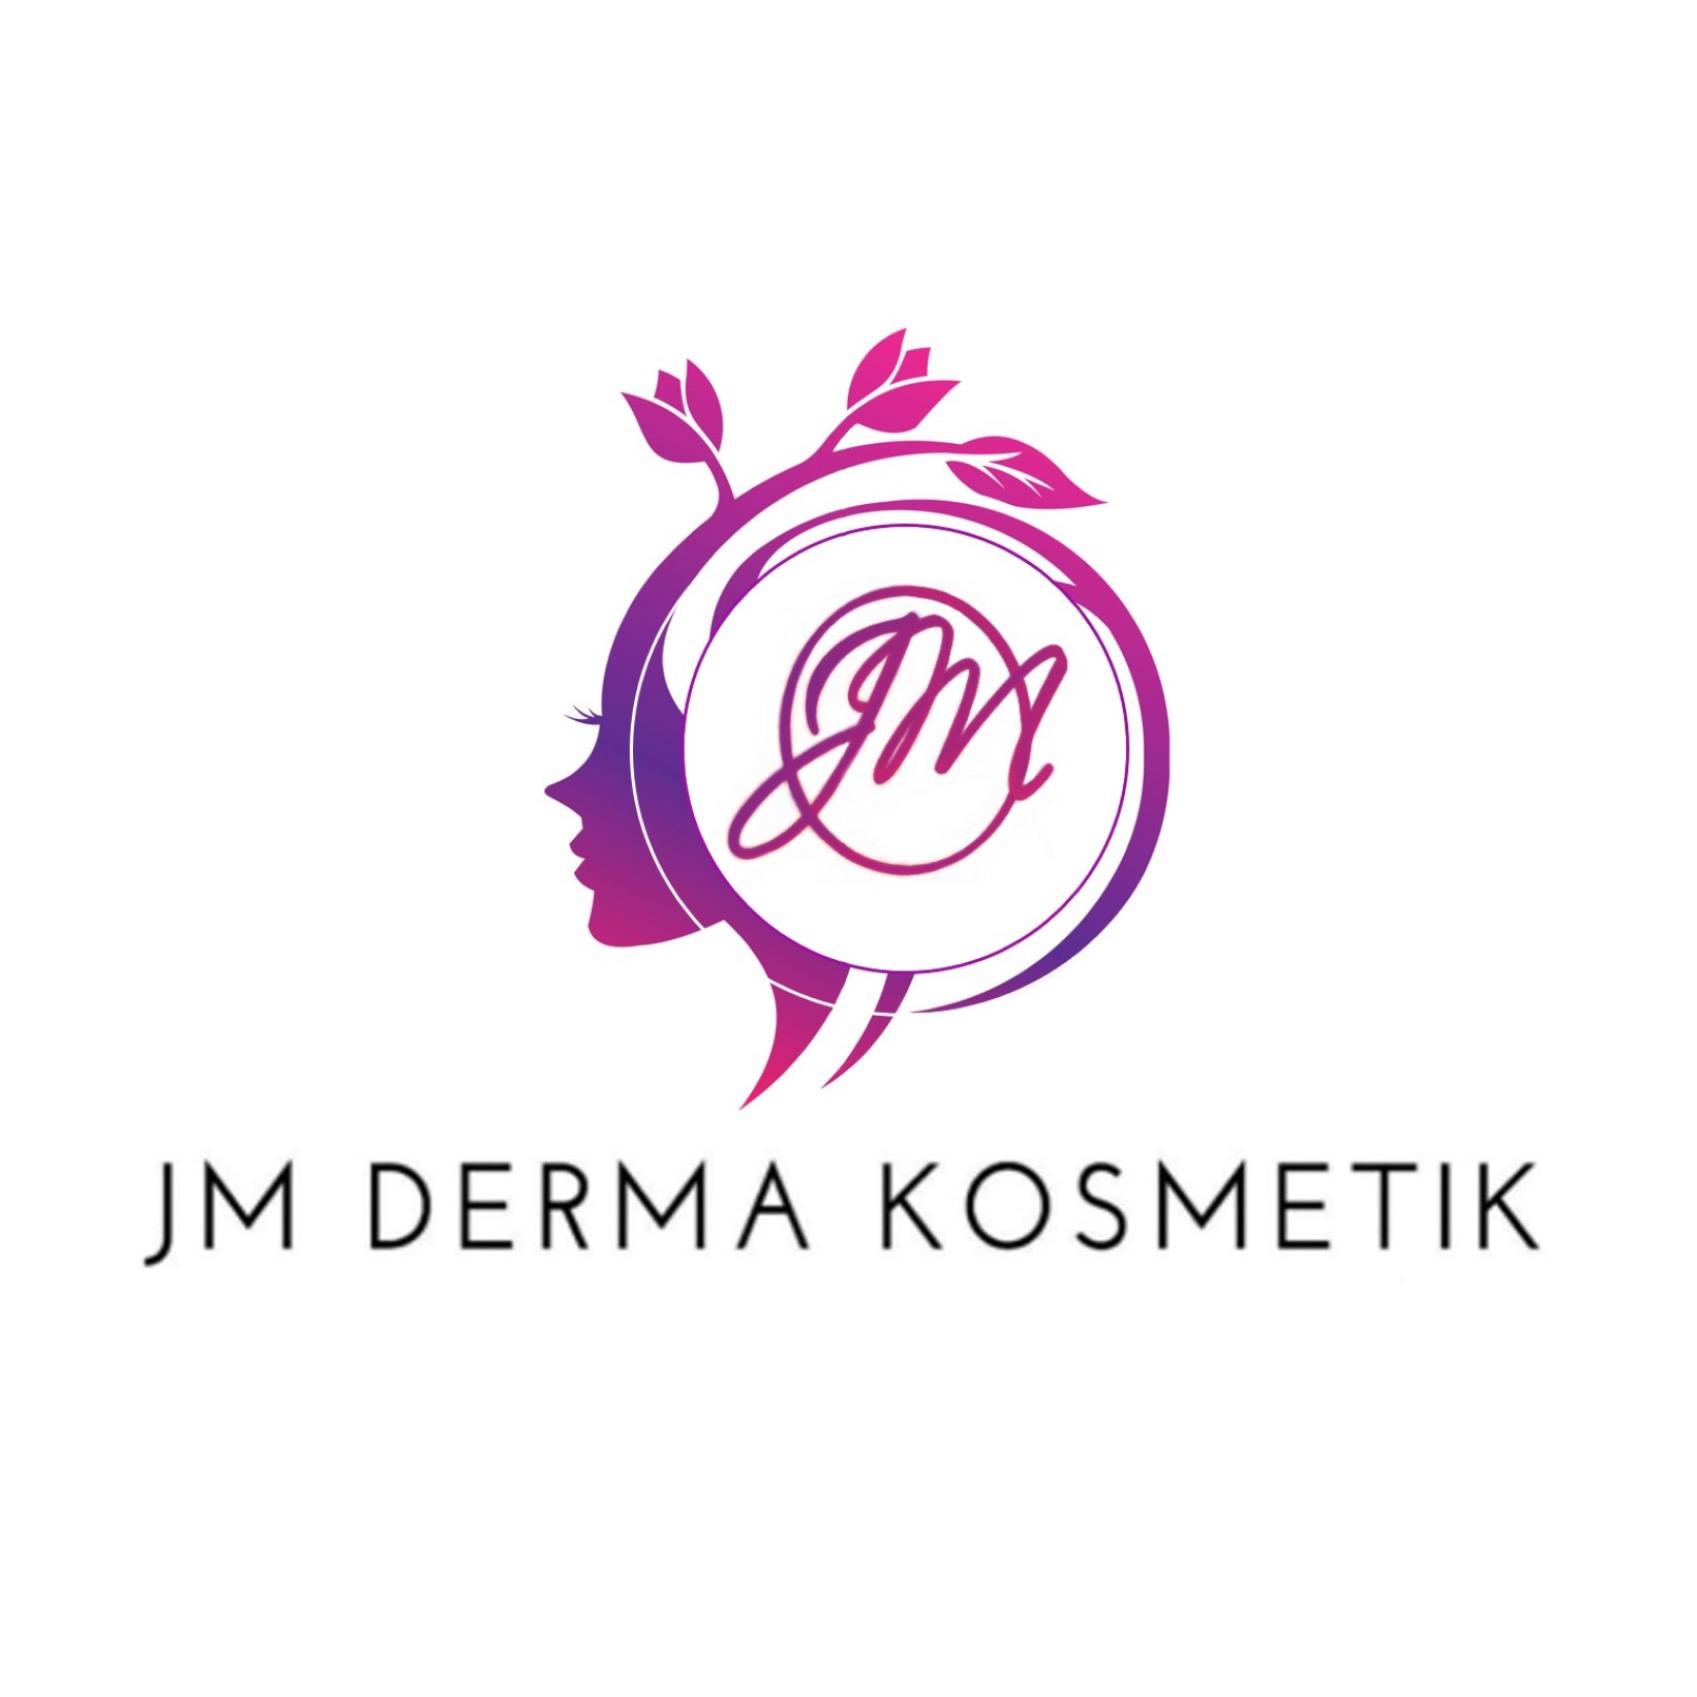 JM Derma Kosmetik, Inh. Jennifer Mendes in Leipzig - Logo